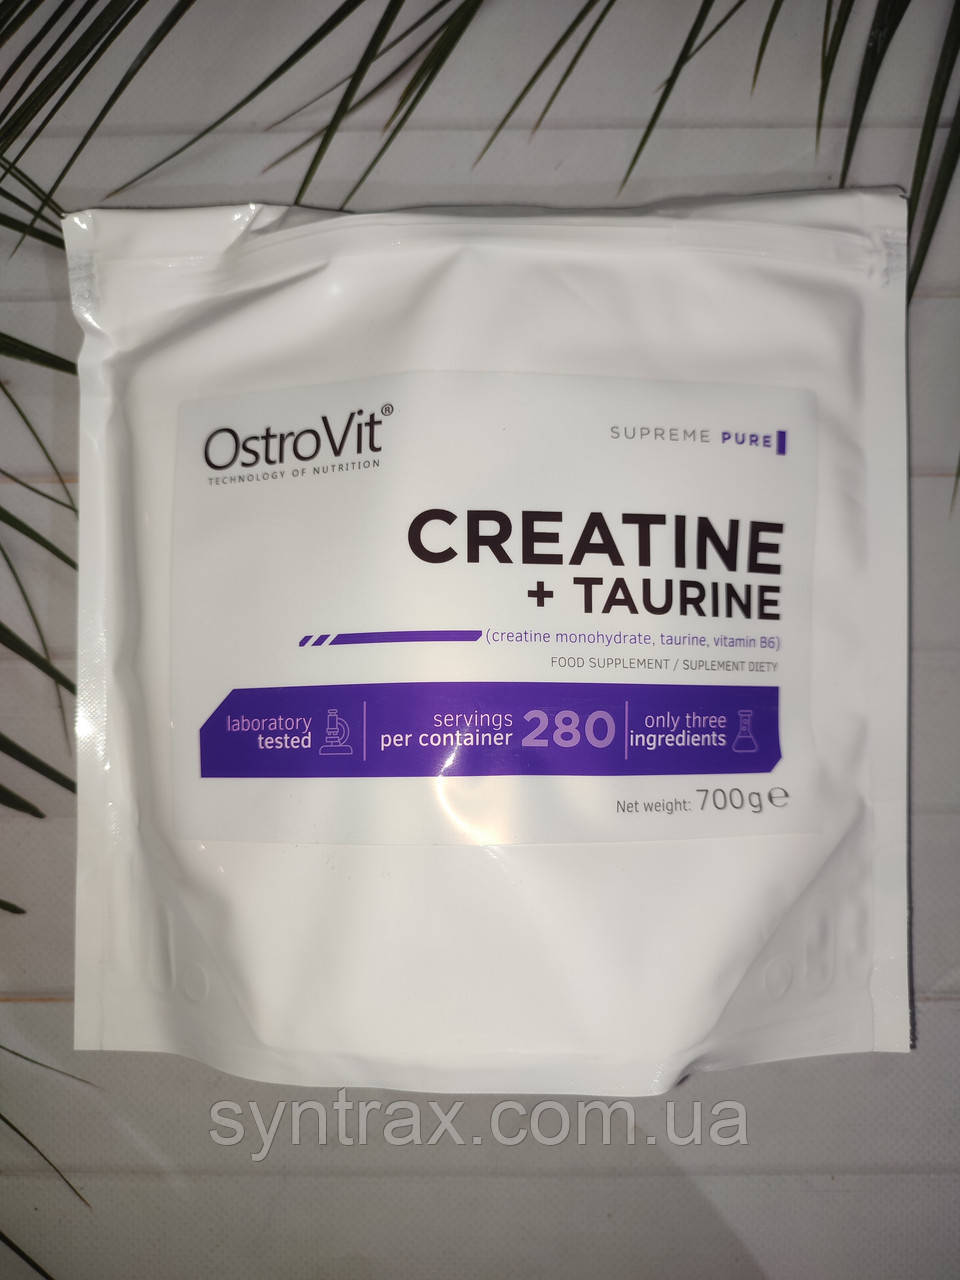 Ostrovit Creatine + Taurine 700g, острівіт креатин + таурин 700 грамів